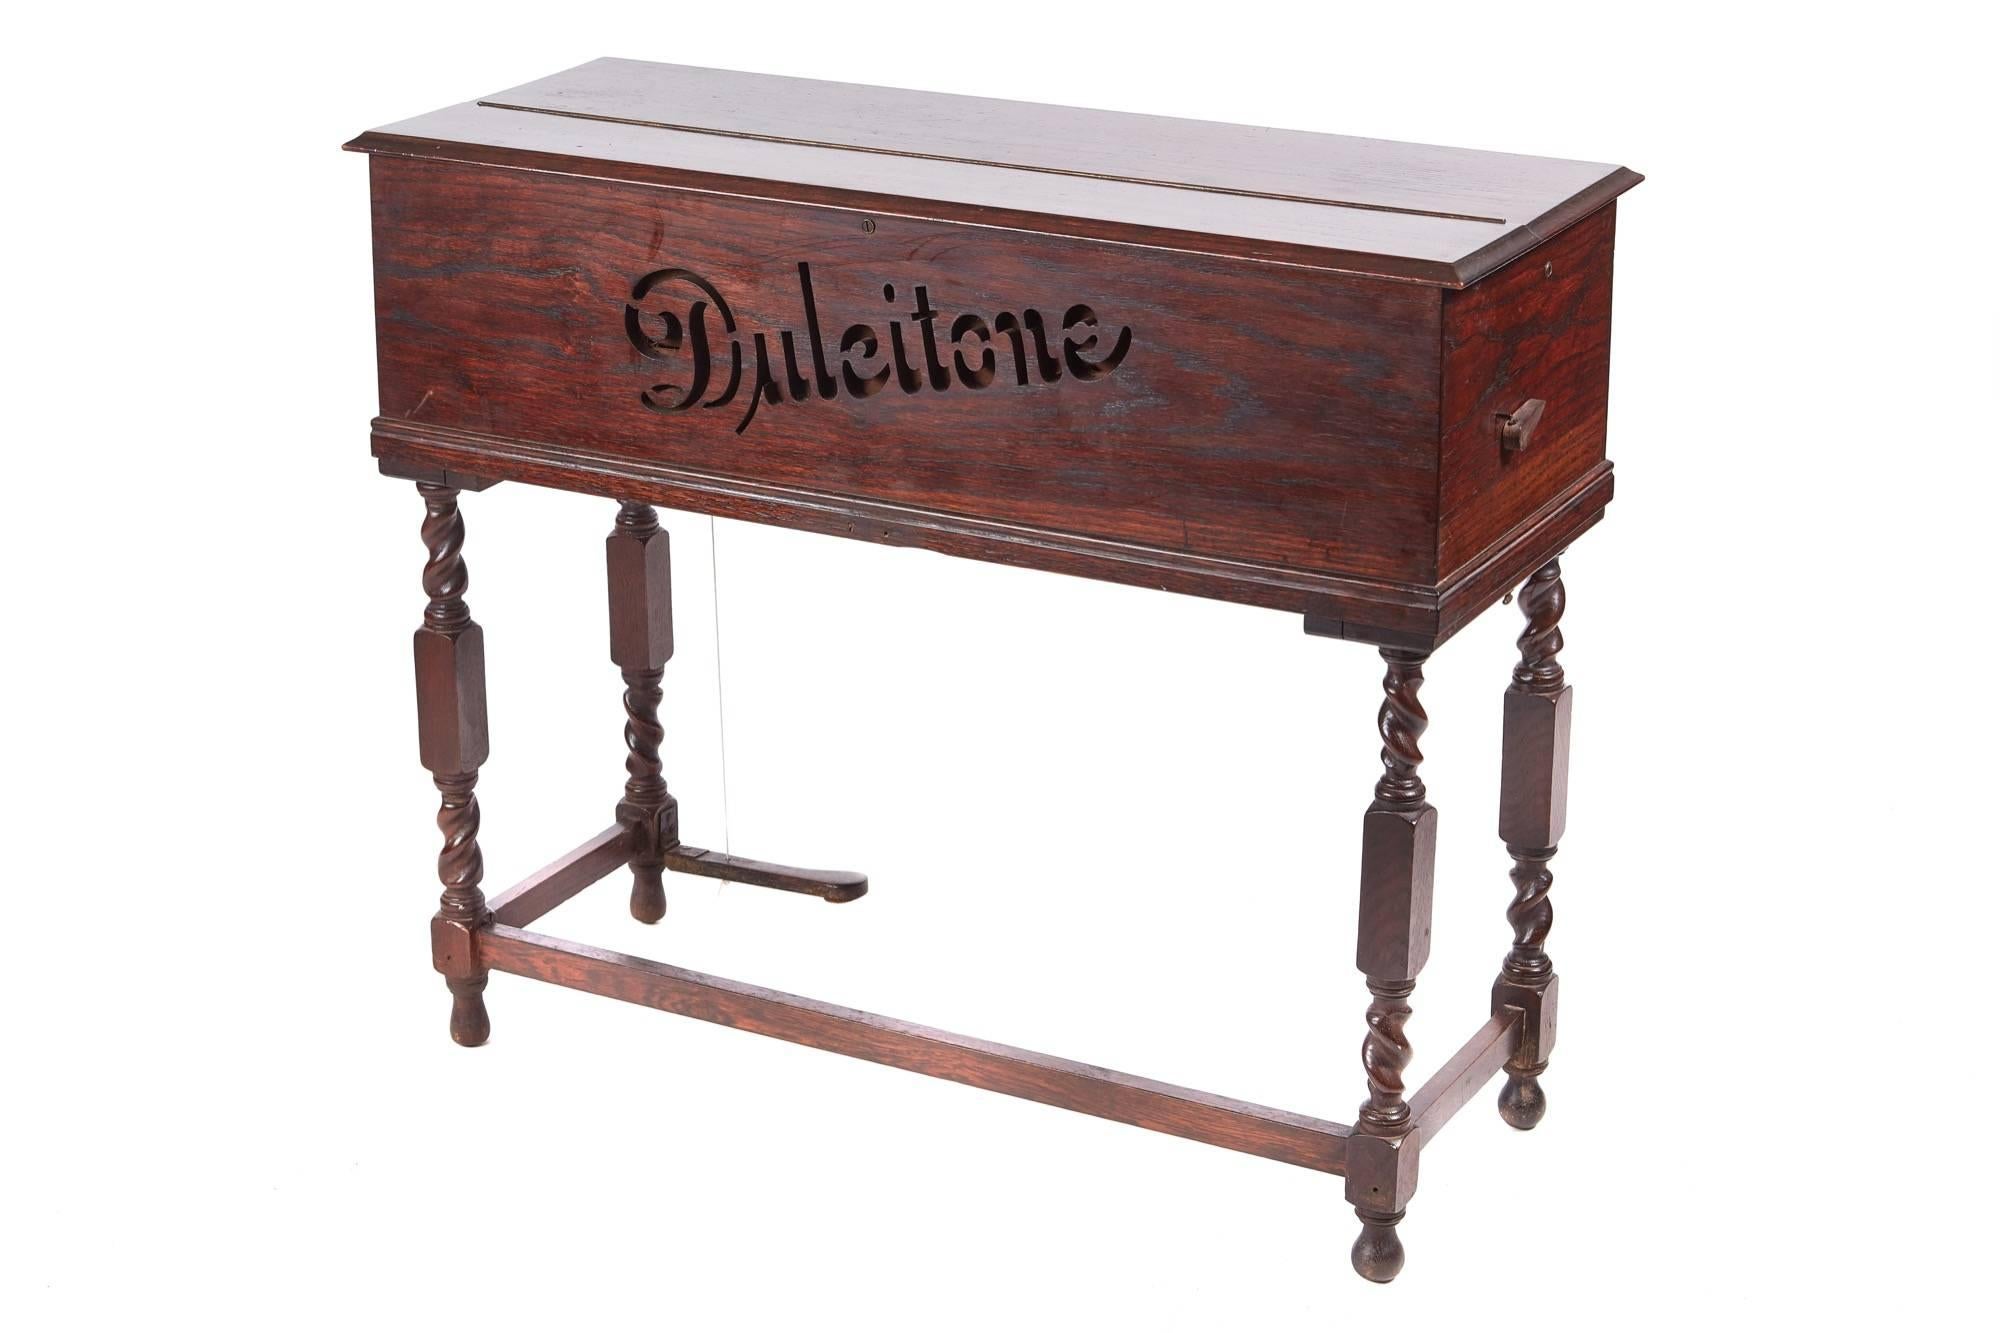 Other Unusual Antique Oak Cased Dulcitone Organ